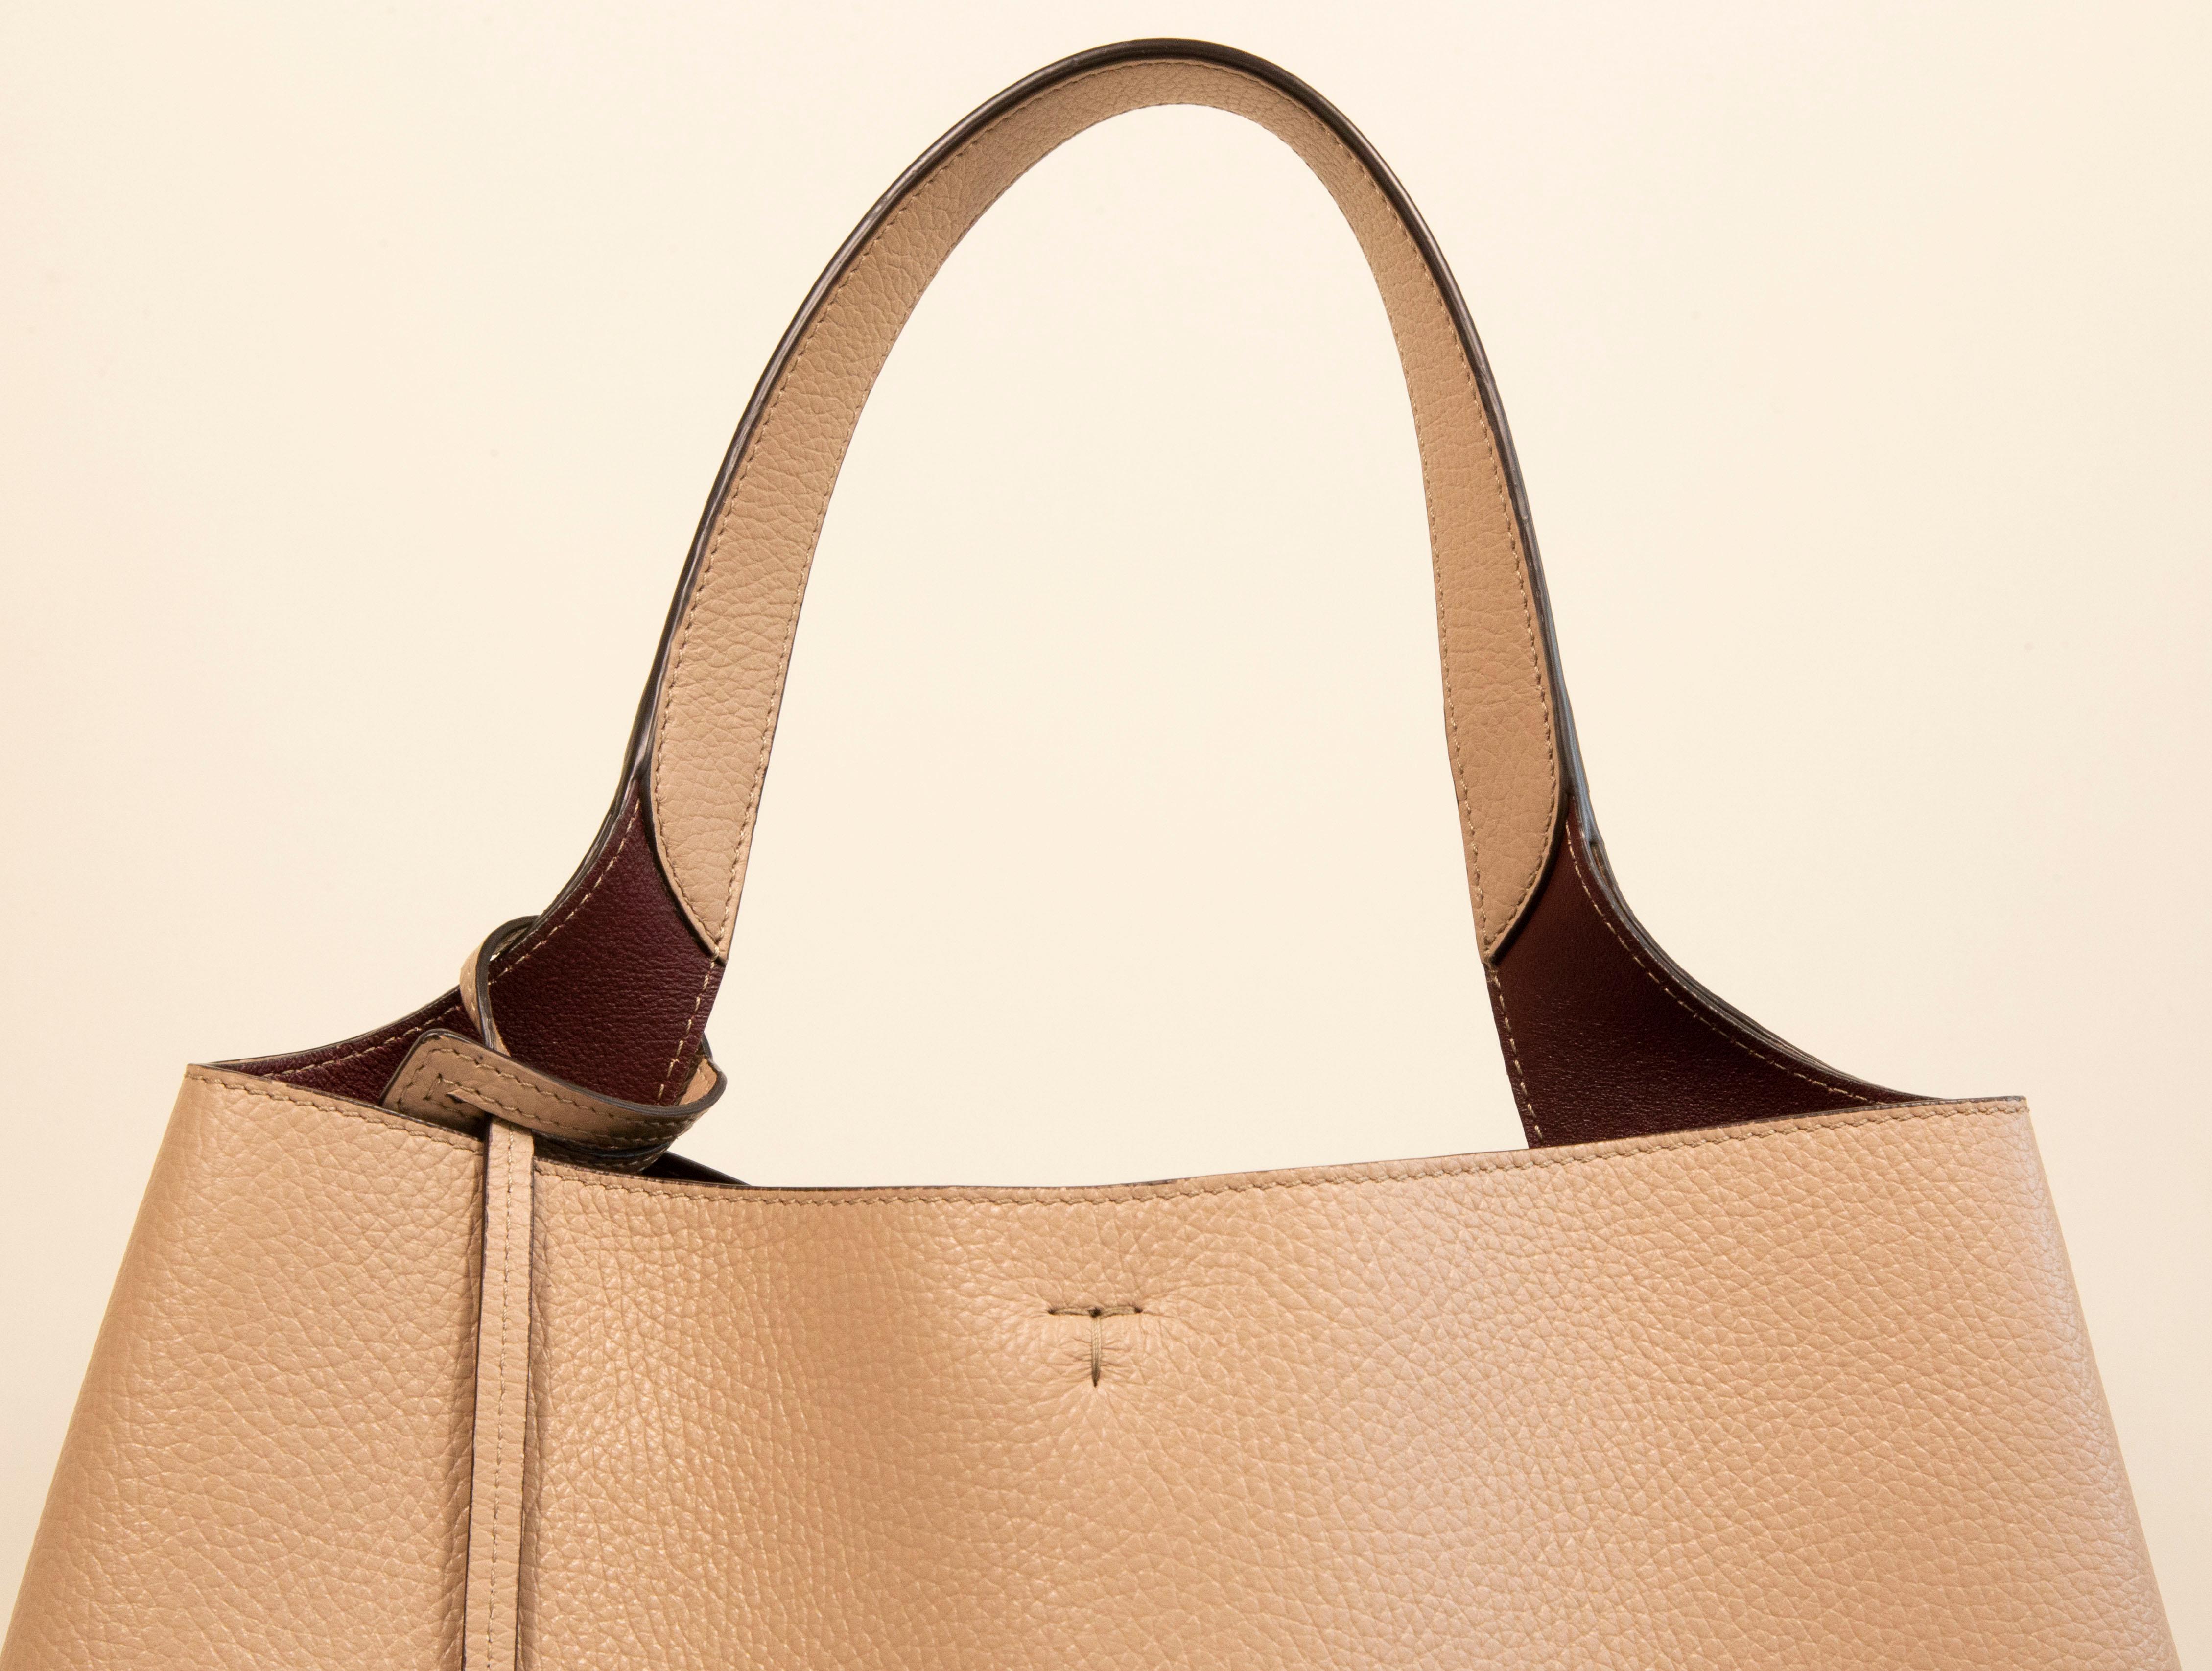 Women's 2020s Tod's Medium Shoulder Bag in Nude /Beige Leather For Sale